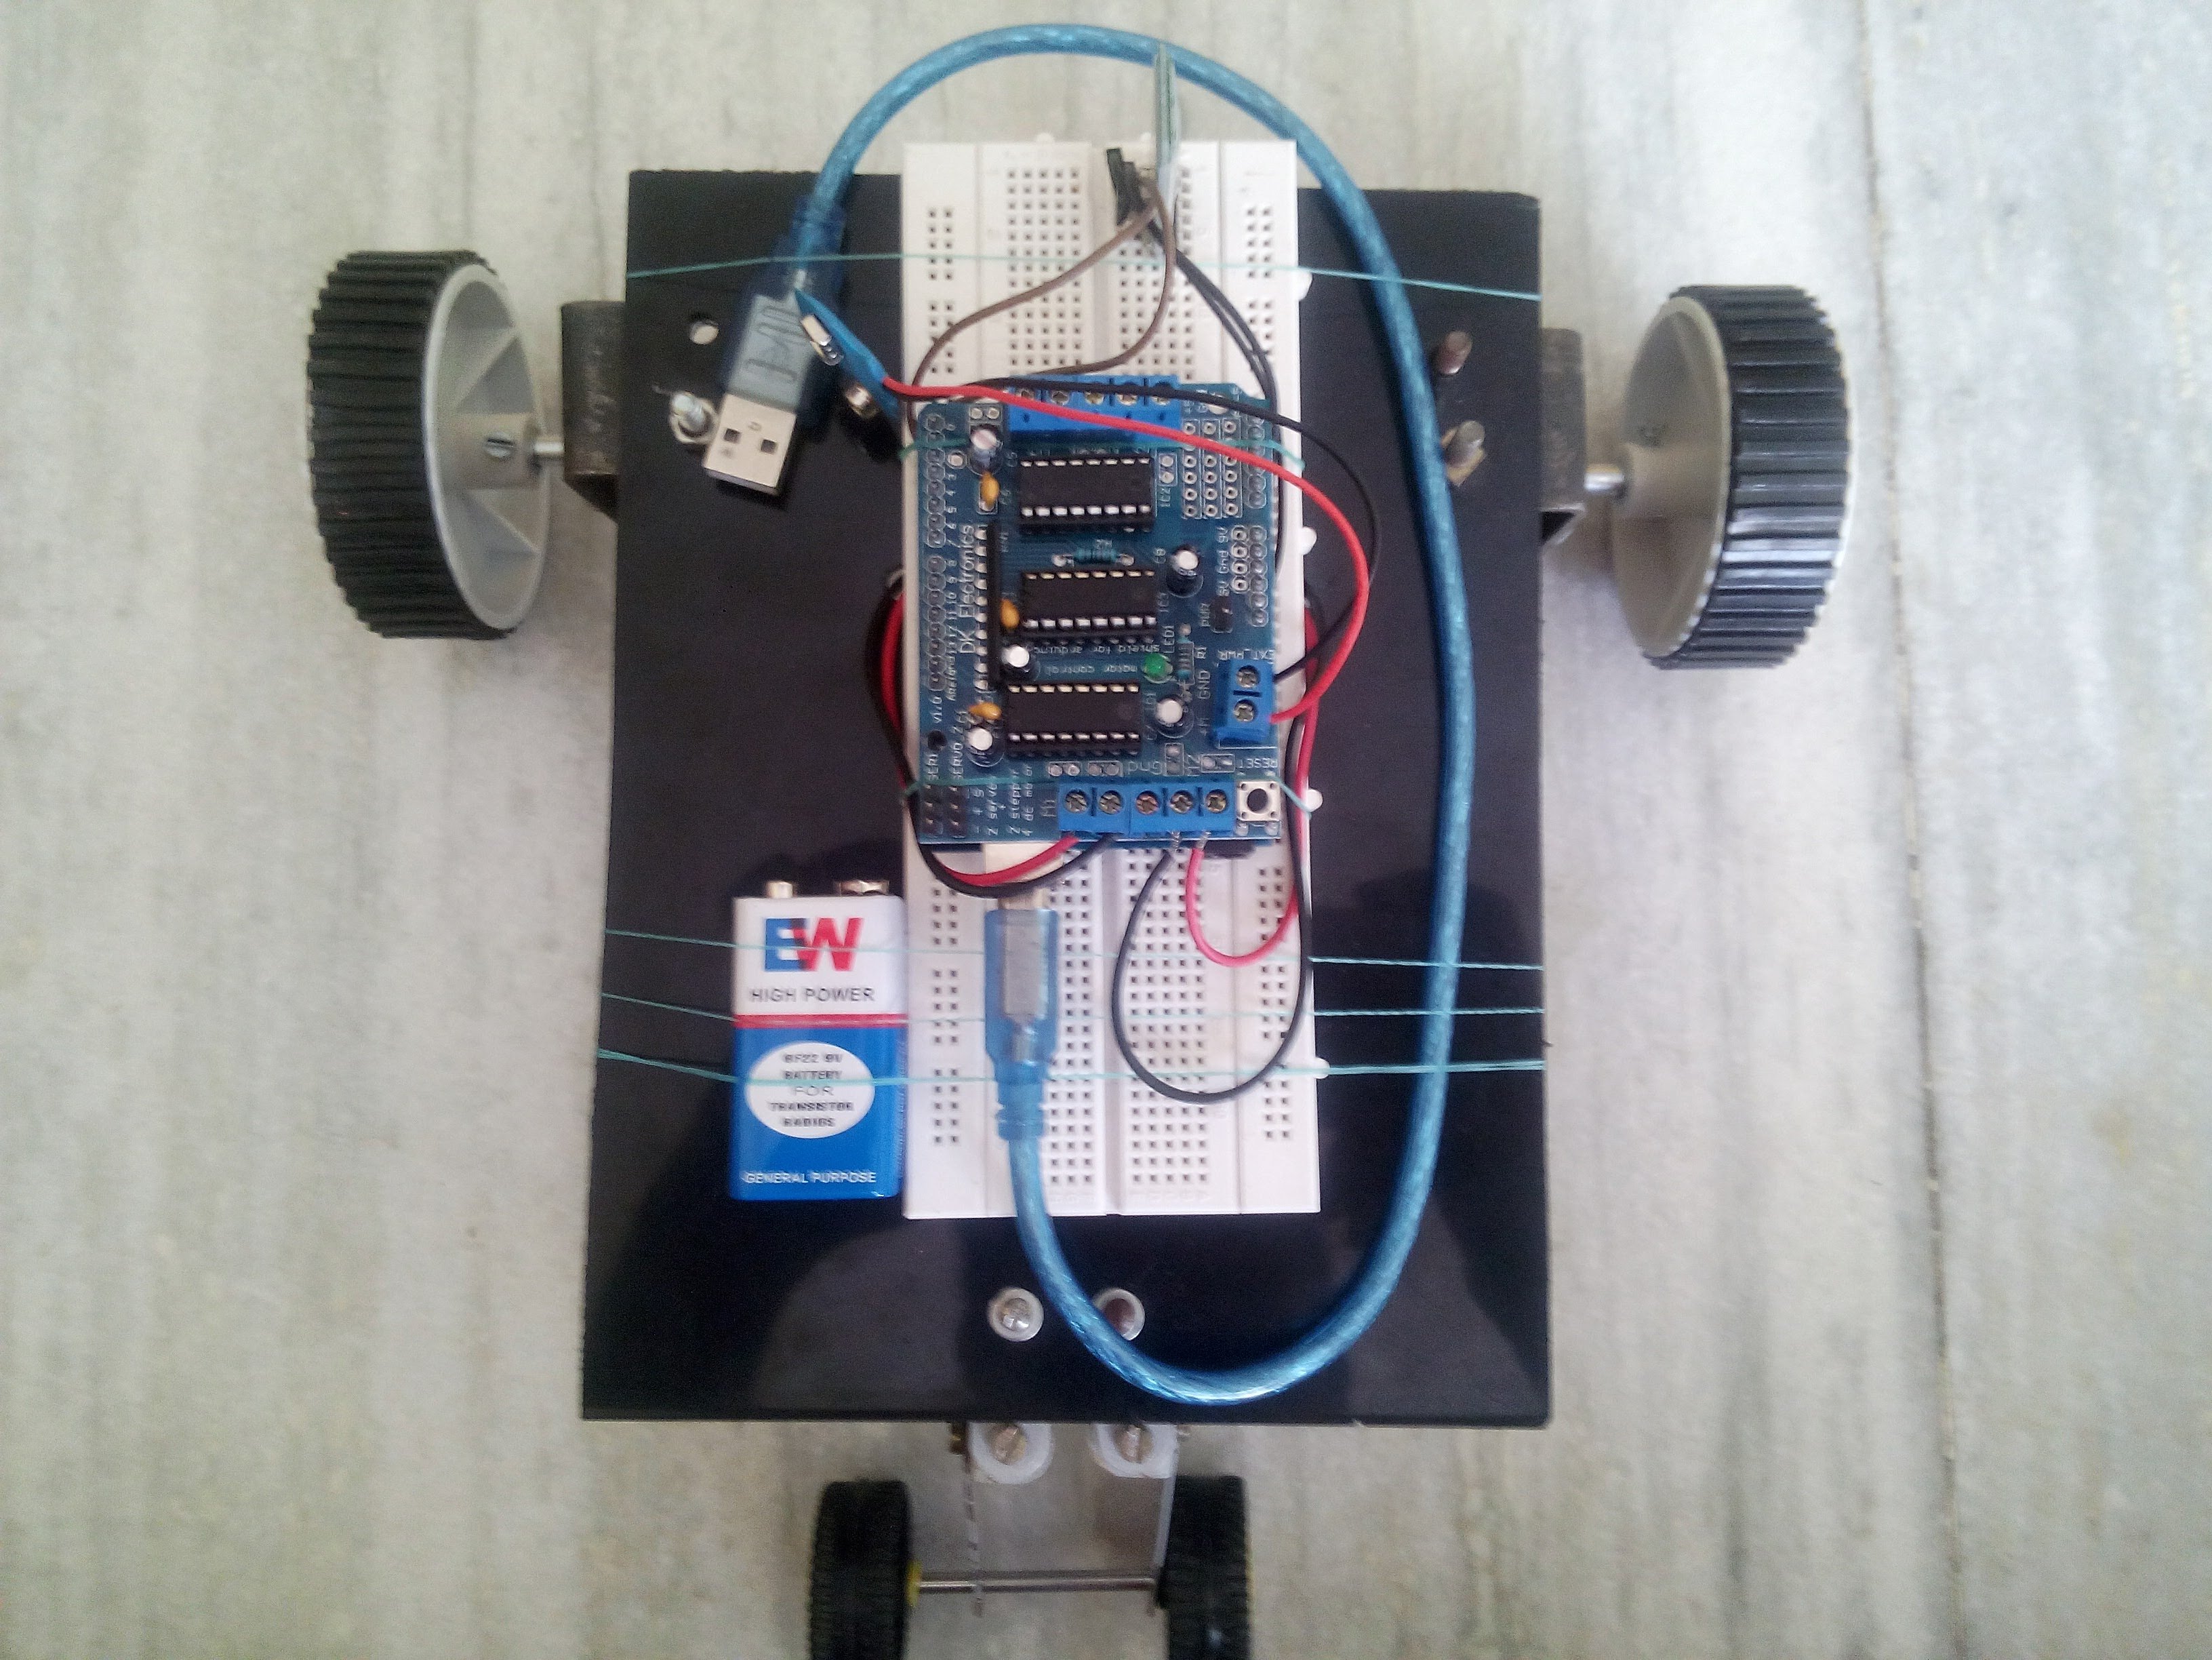 bluetooth controlled car using arduino nano